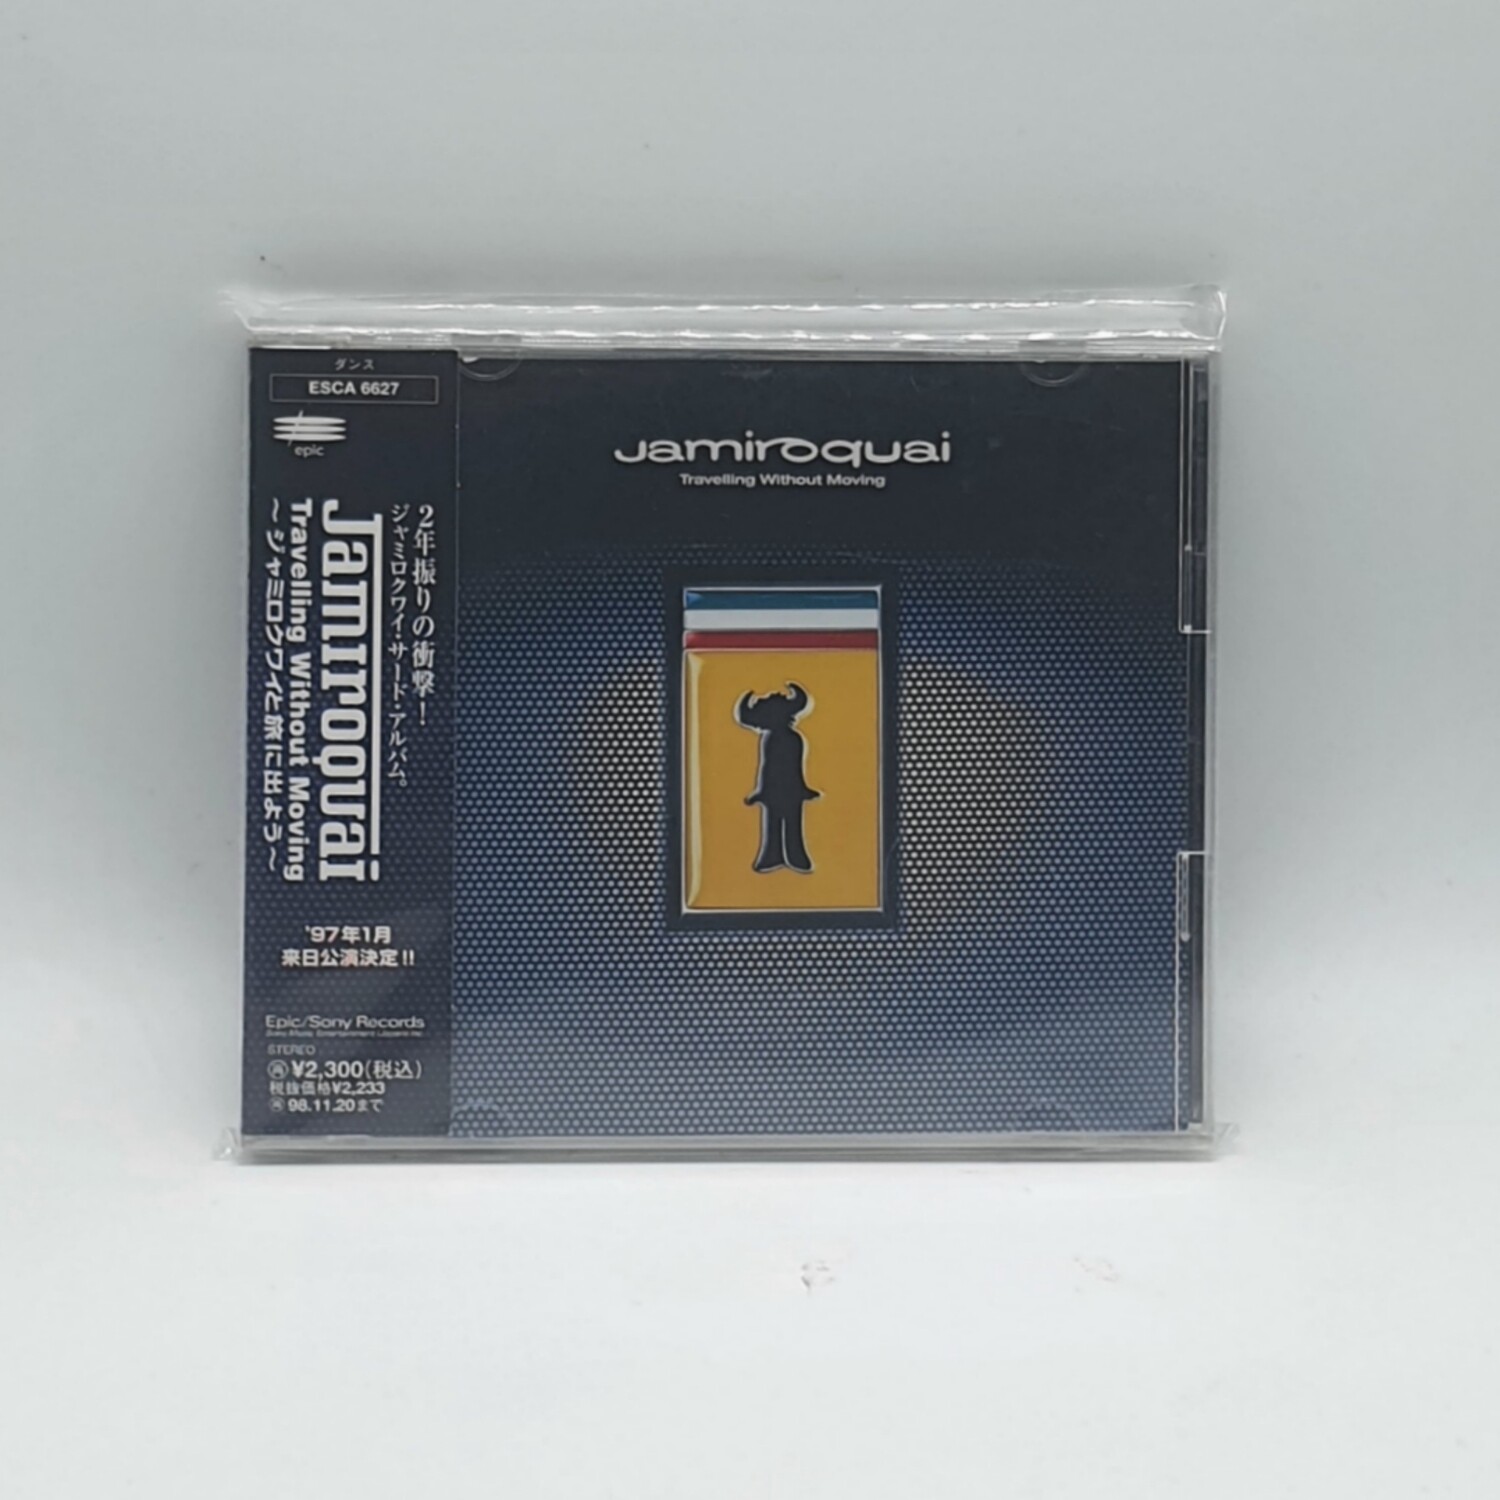 [USED] JAMIROQUAI -TRAVELLING WITHOUT MOVING- CD (JAPAN PRESS)